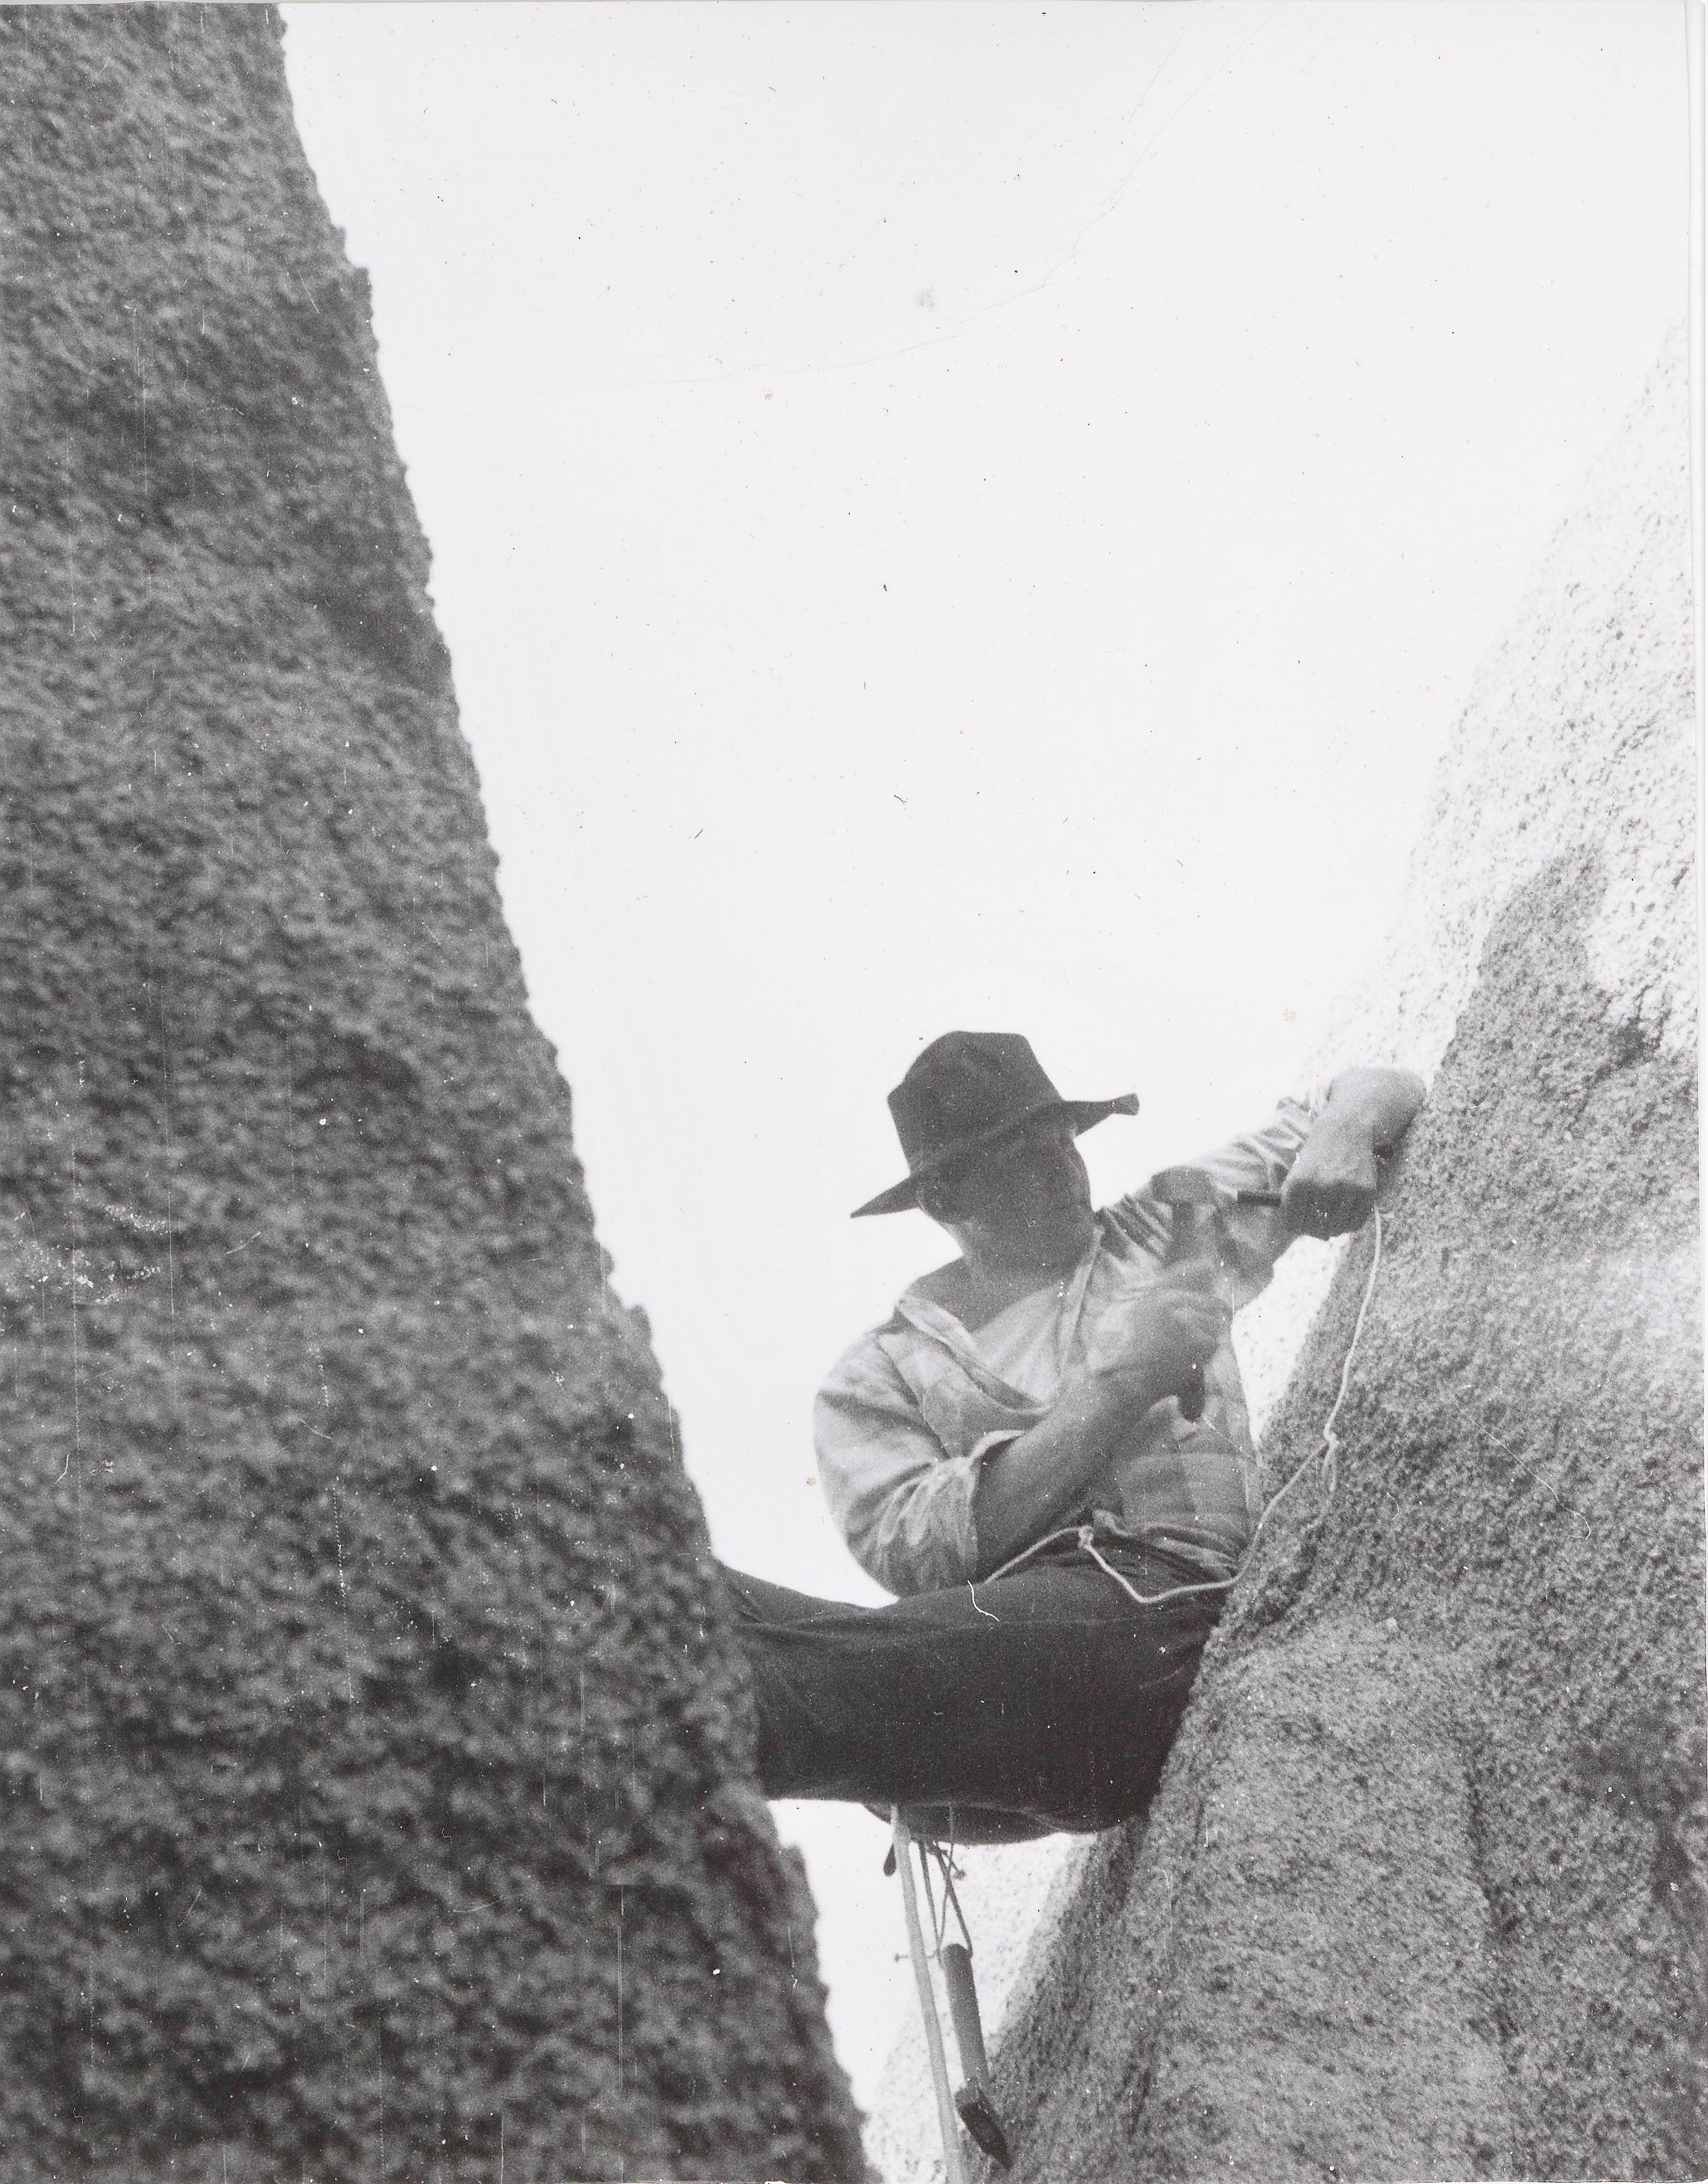 John Davis on 1st ascent of The Wedge, 1956